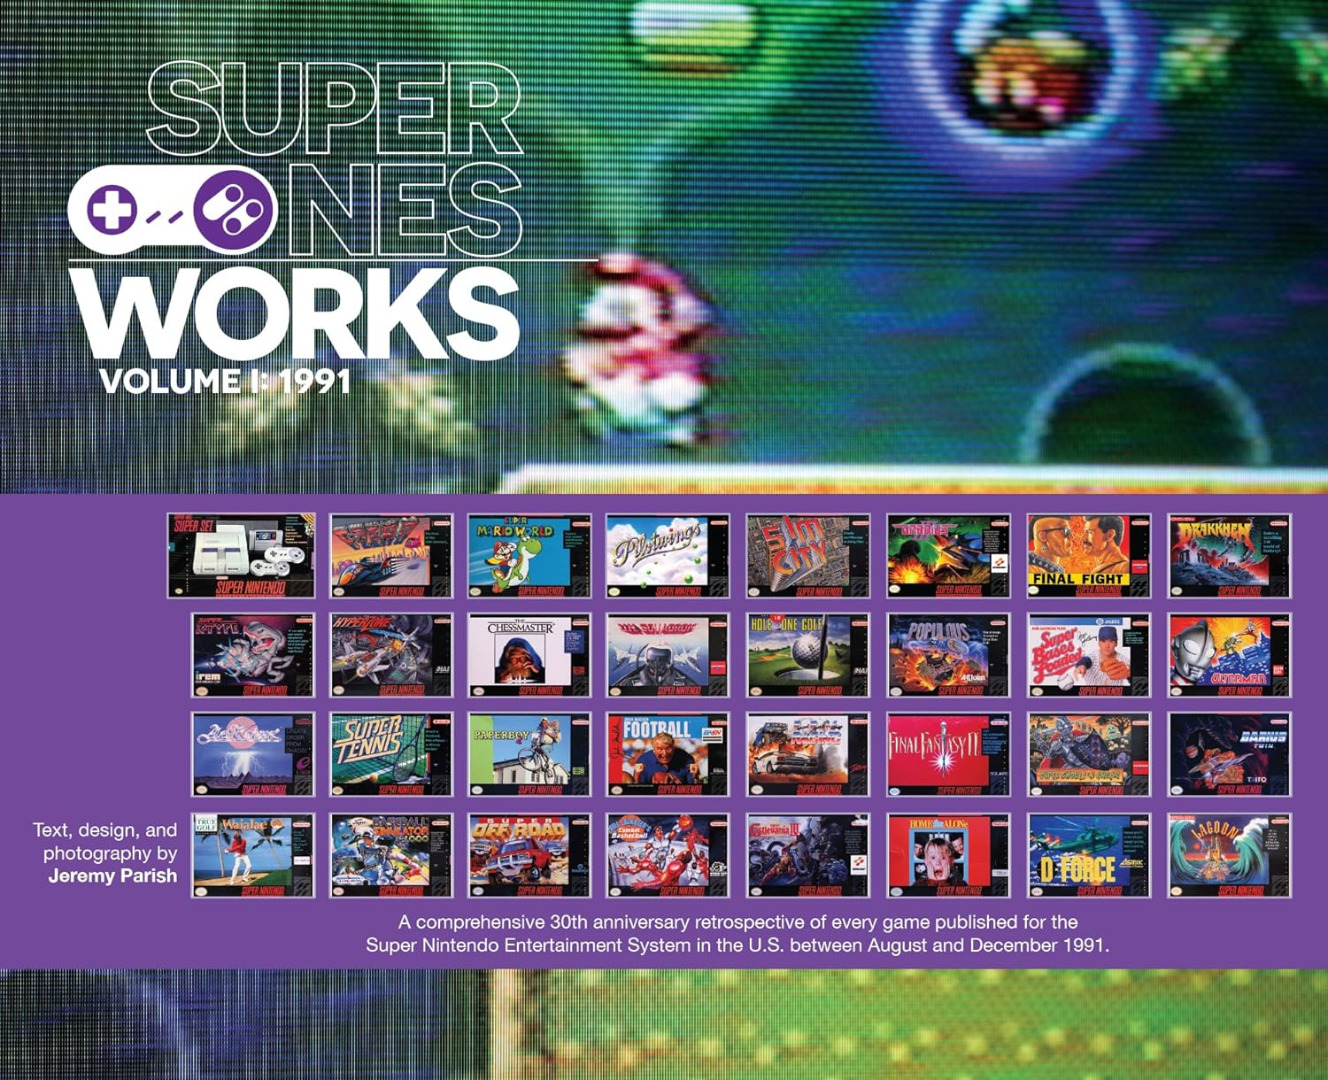 Super NES Works Vol. I: 1991: Jeremy Parish